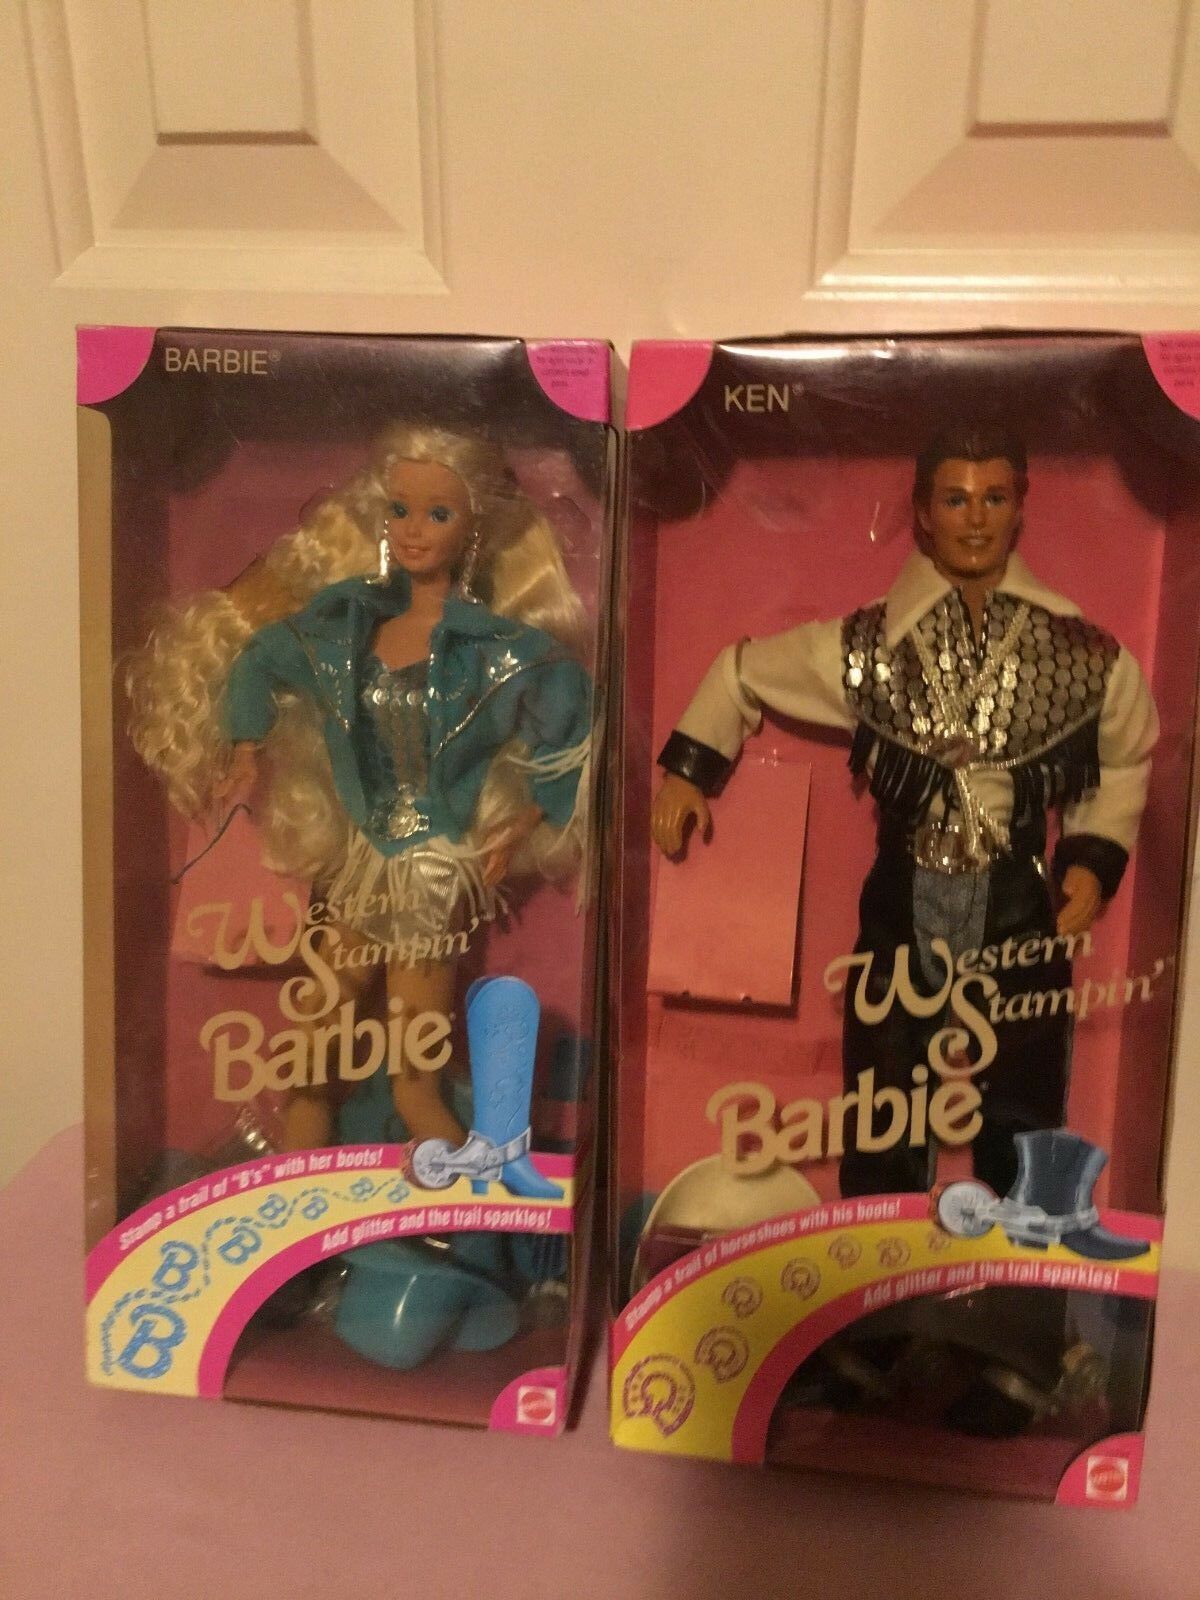 Western Stampin' Barbie & Western Stampin' Ken - 1993 Nrfb